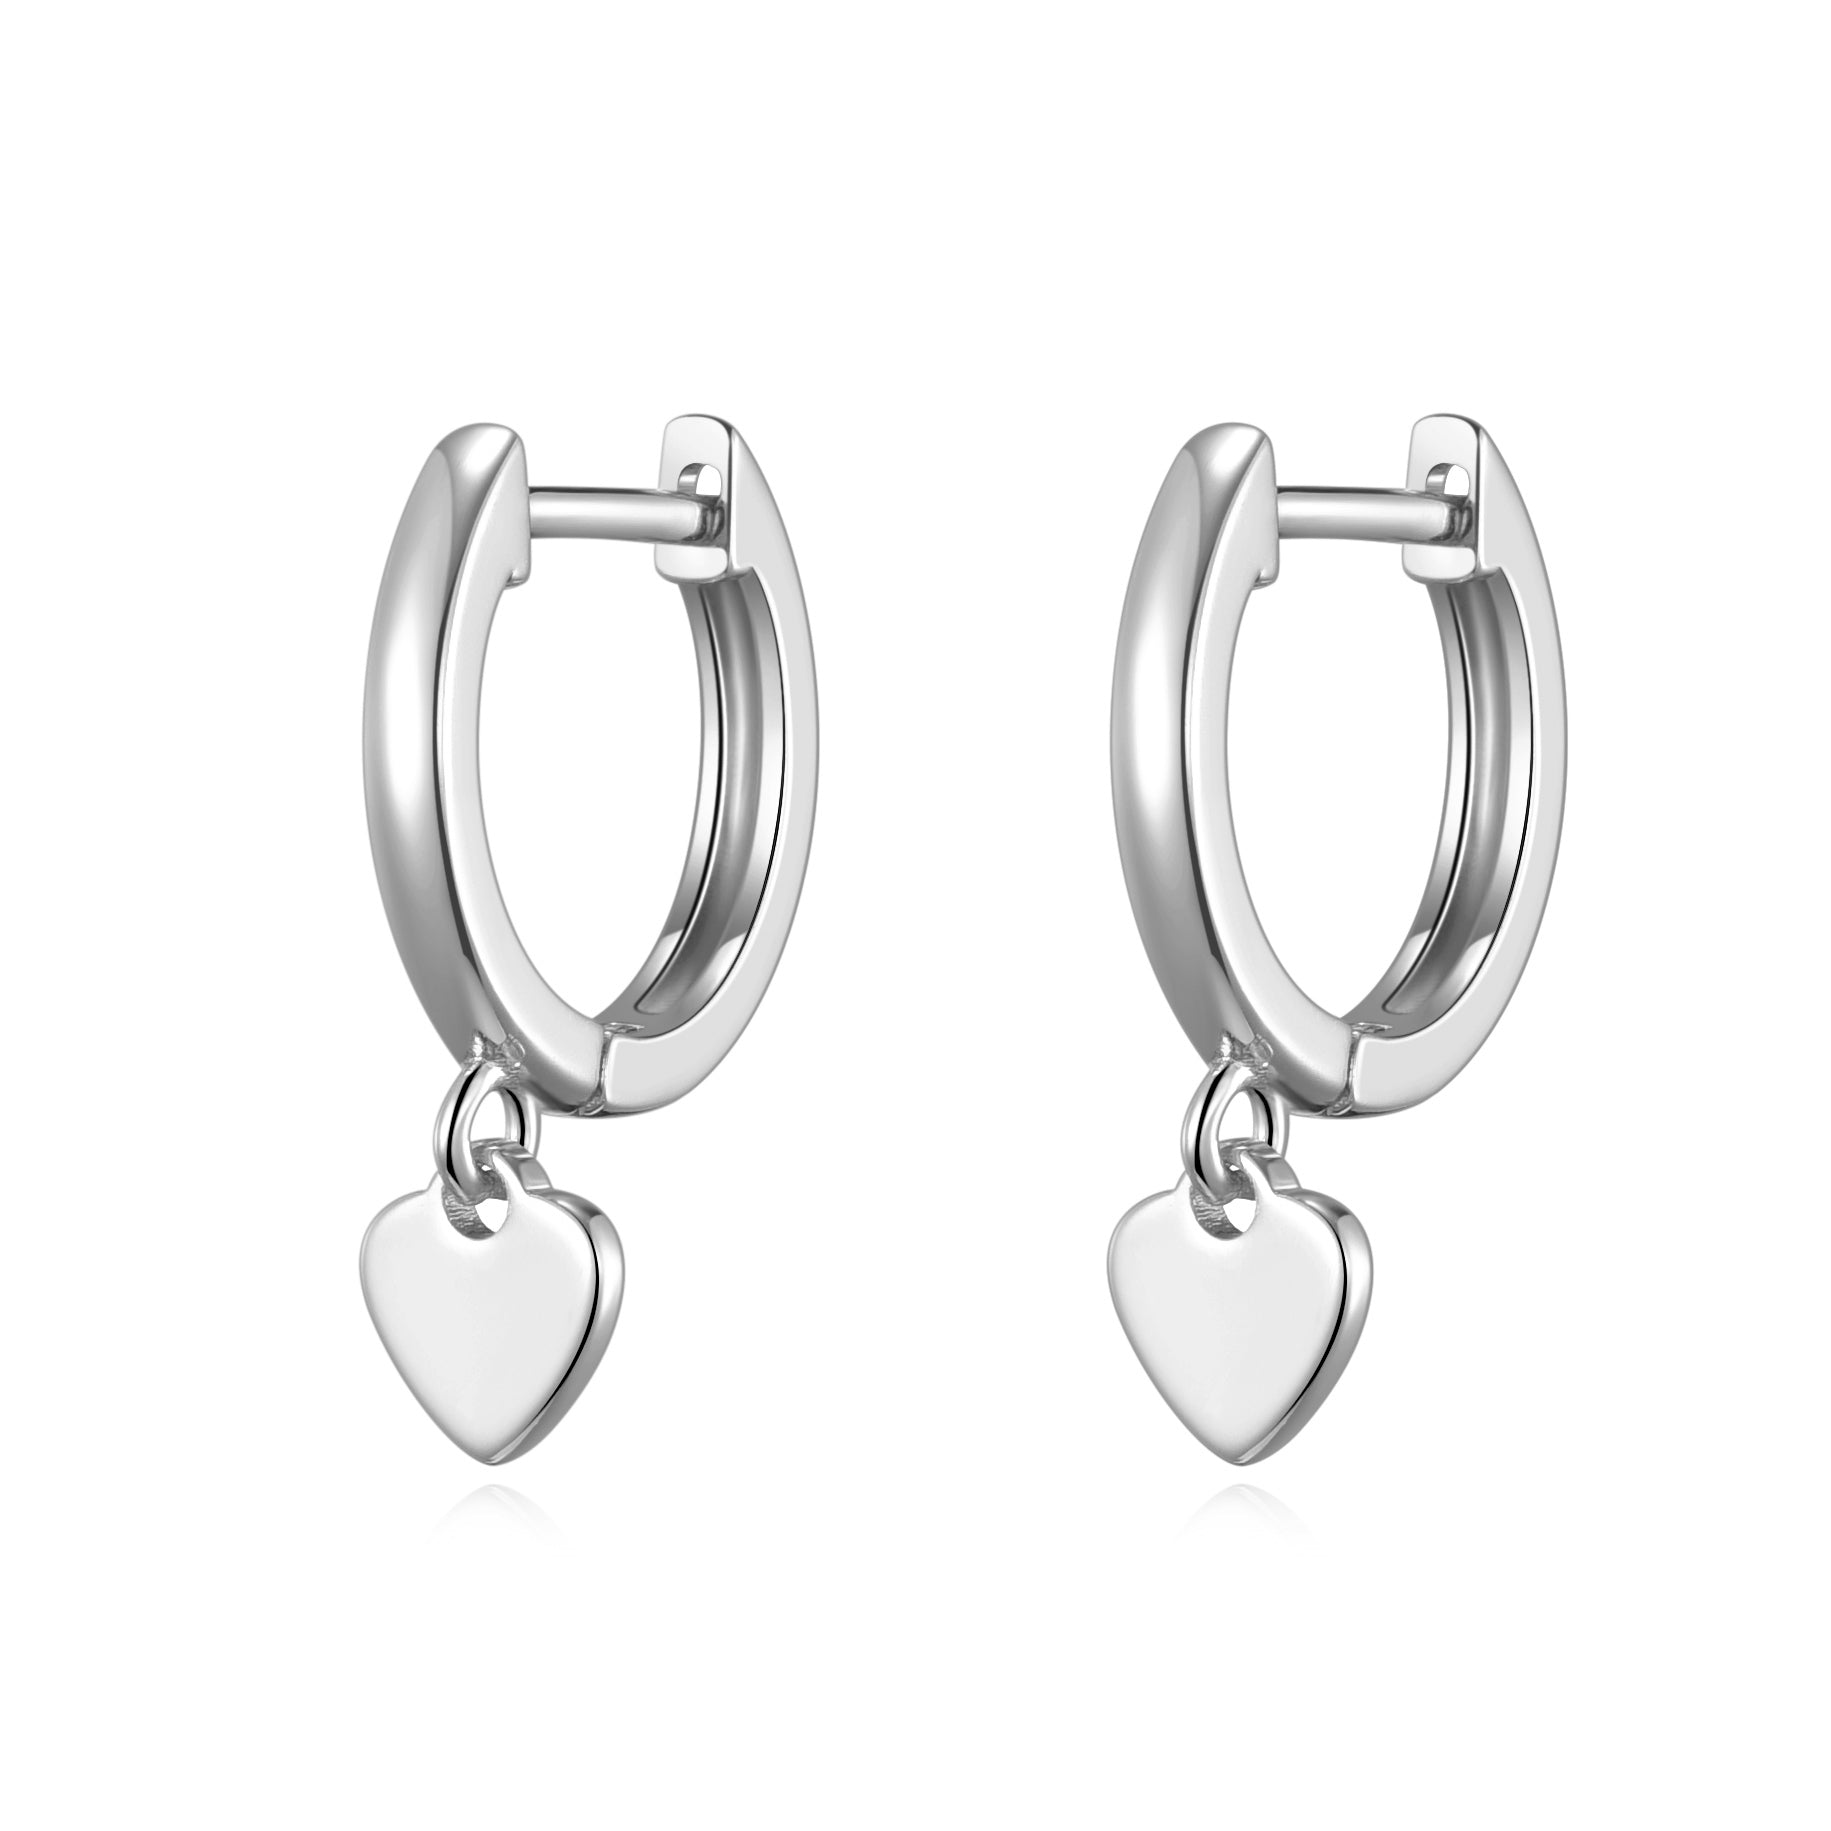 Silver Plated Heart Charm Hoop Earrings by Philip Jones Jewellery